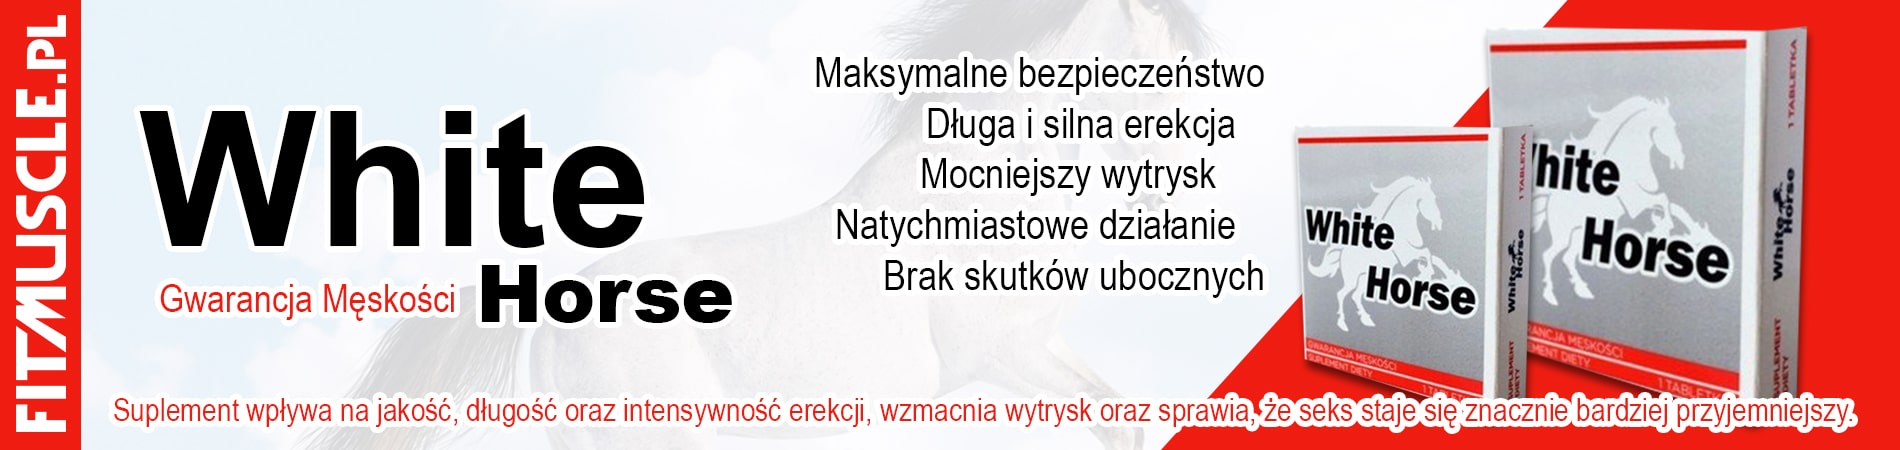 White Horse | Gwarancja Męskości | The white horse